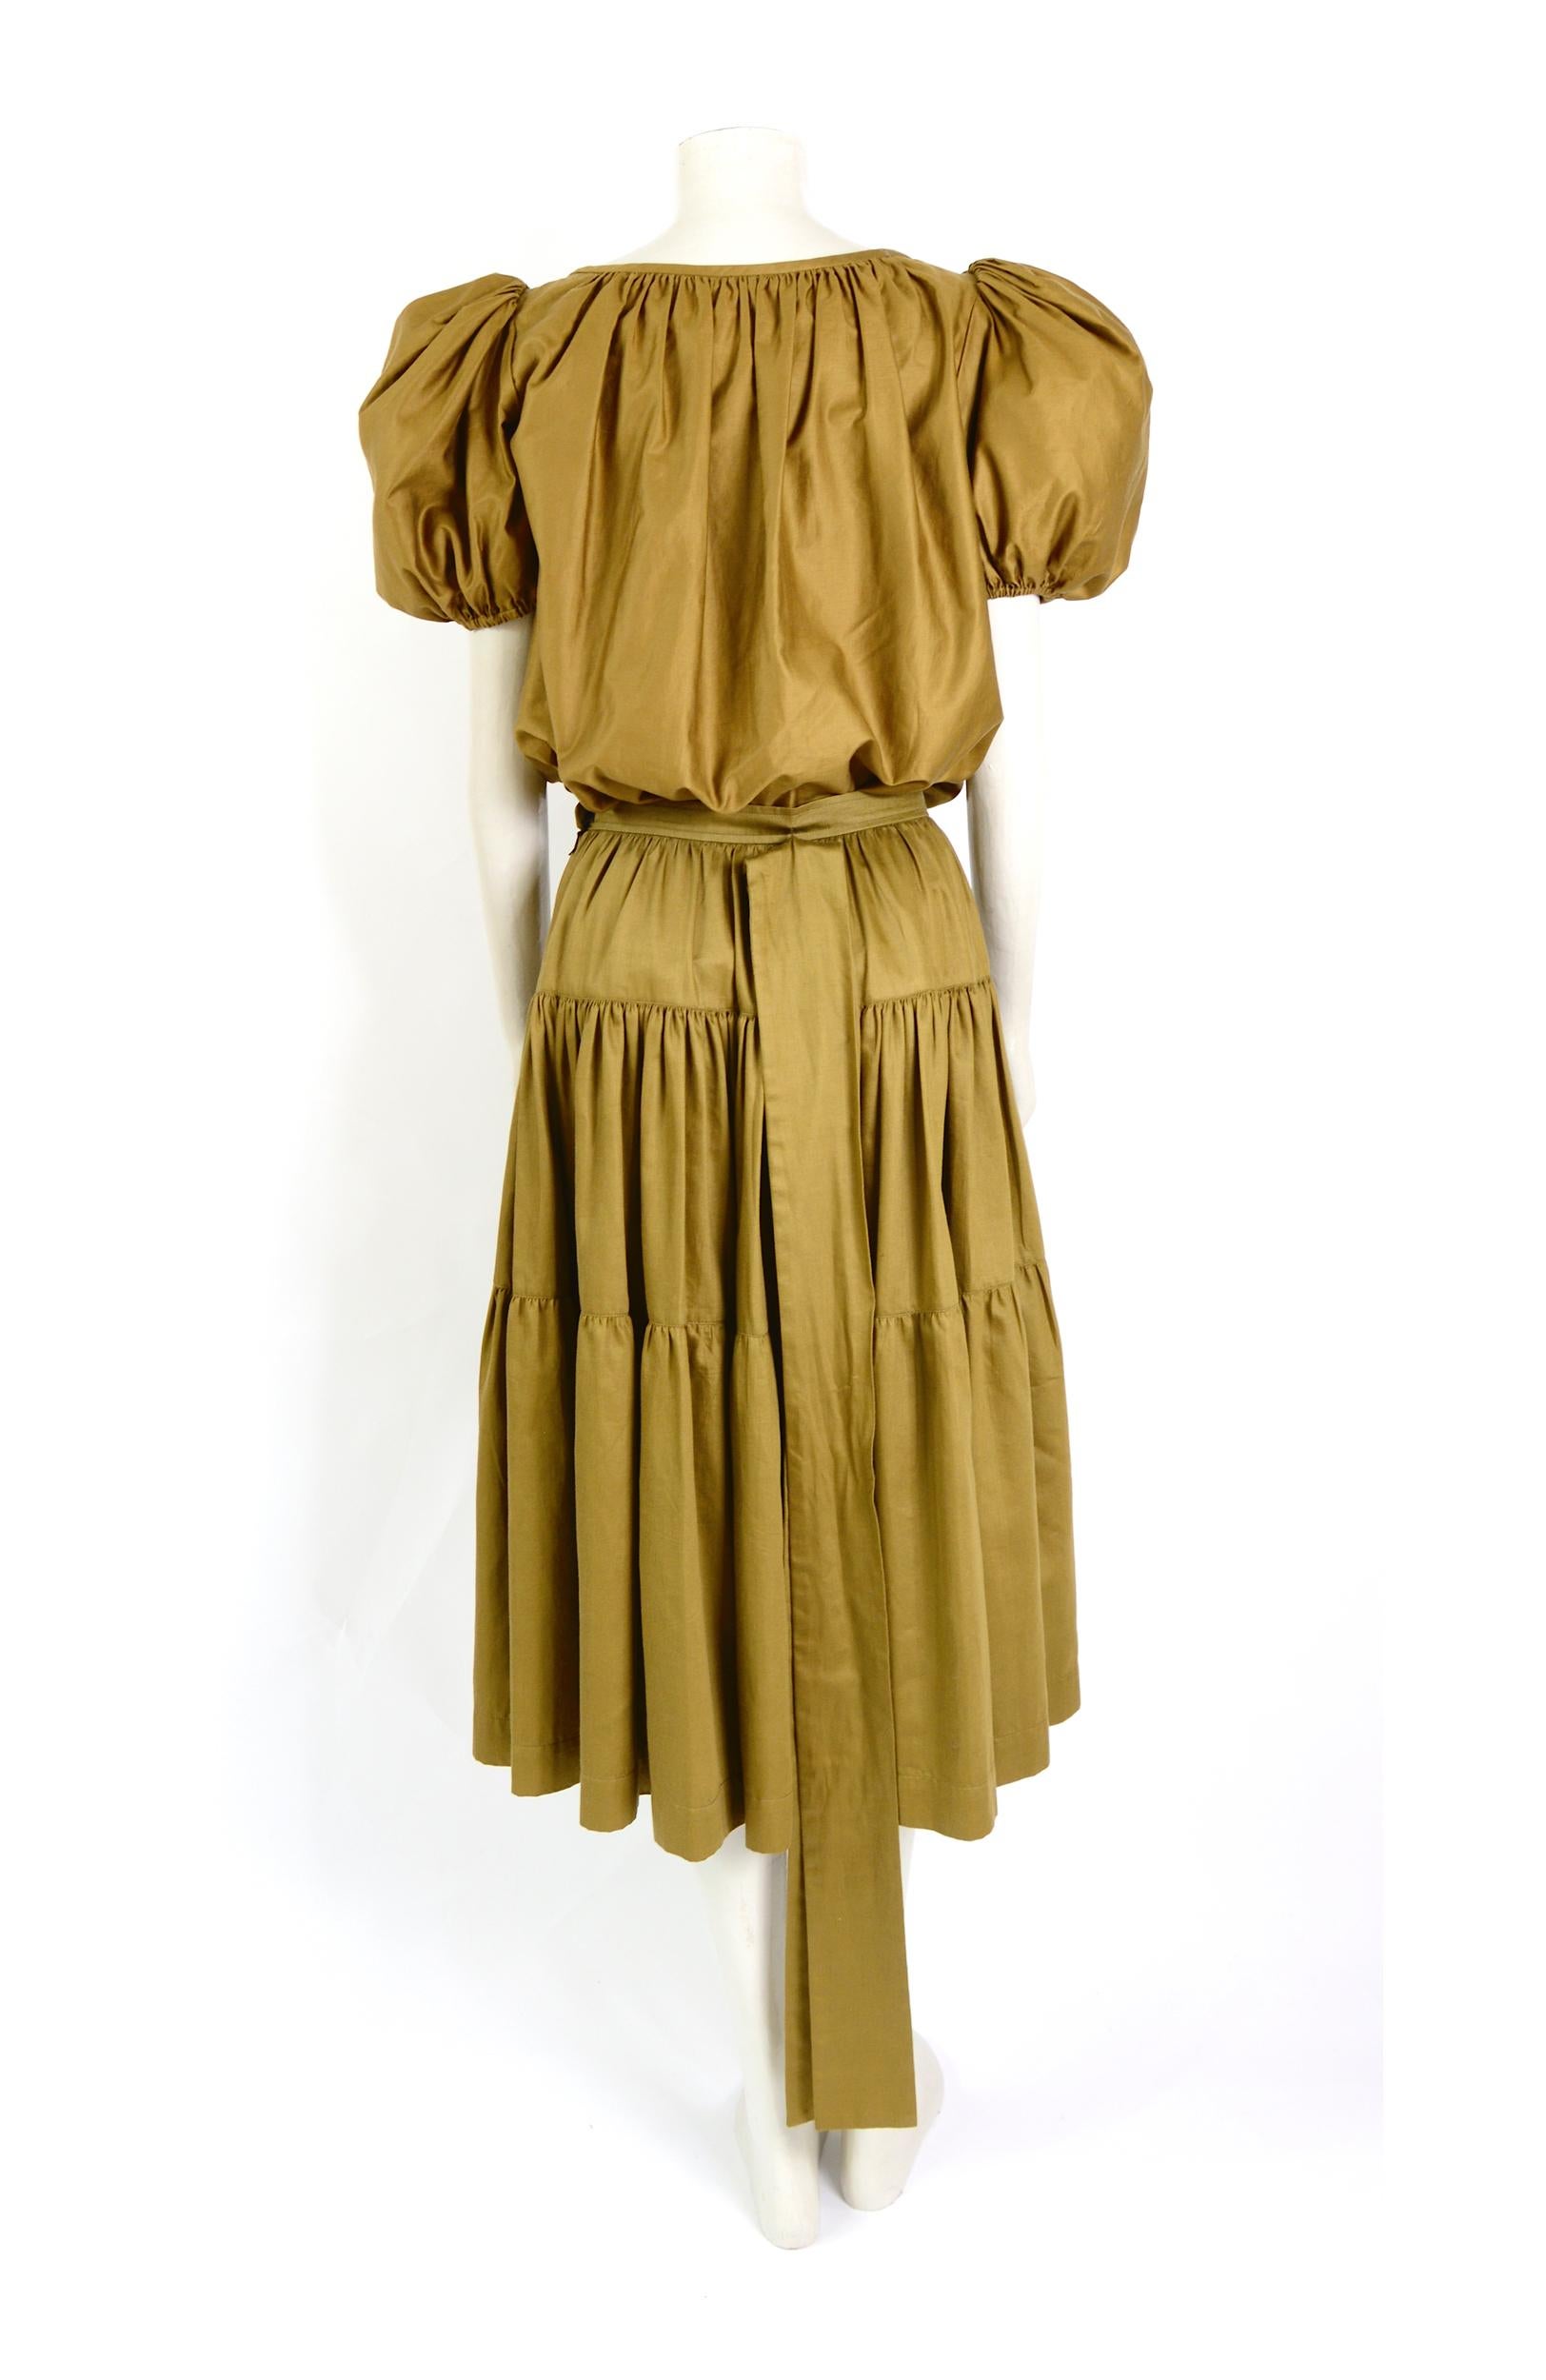 Women's Yves Saint Laurent iconic 1970s vintage khaki cotton peasant top and skirt set